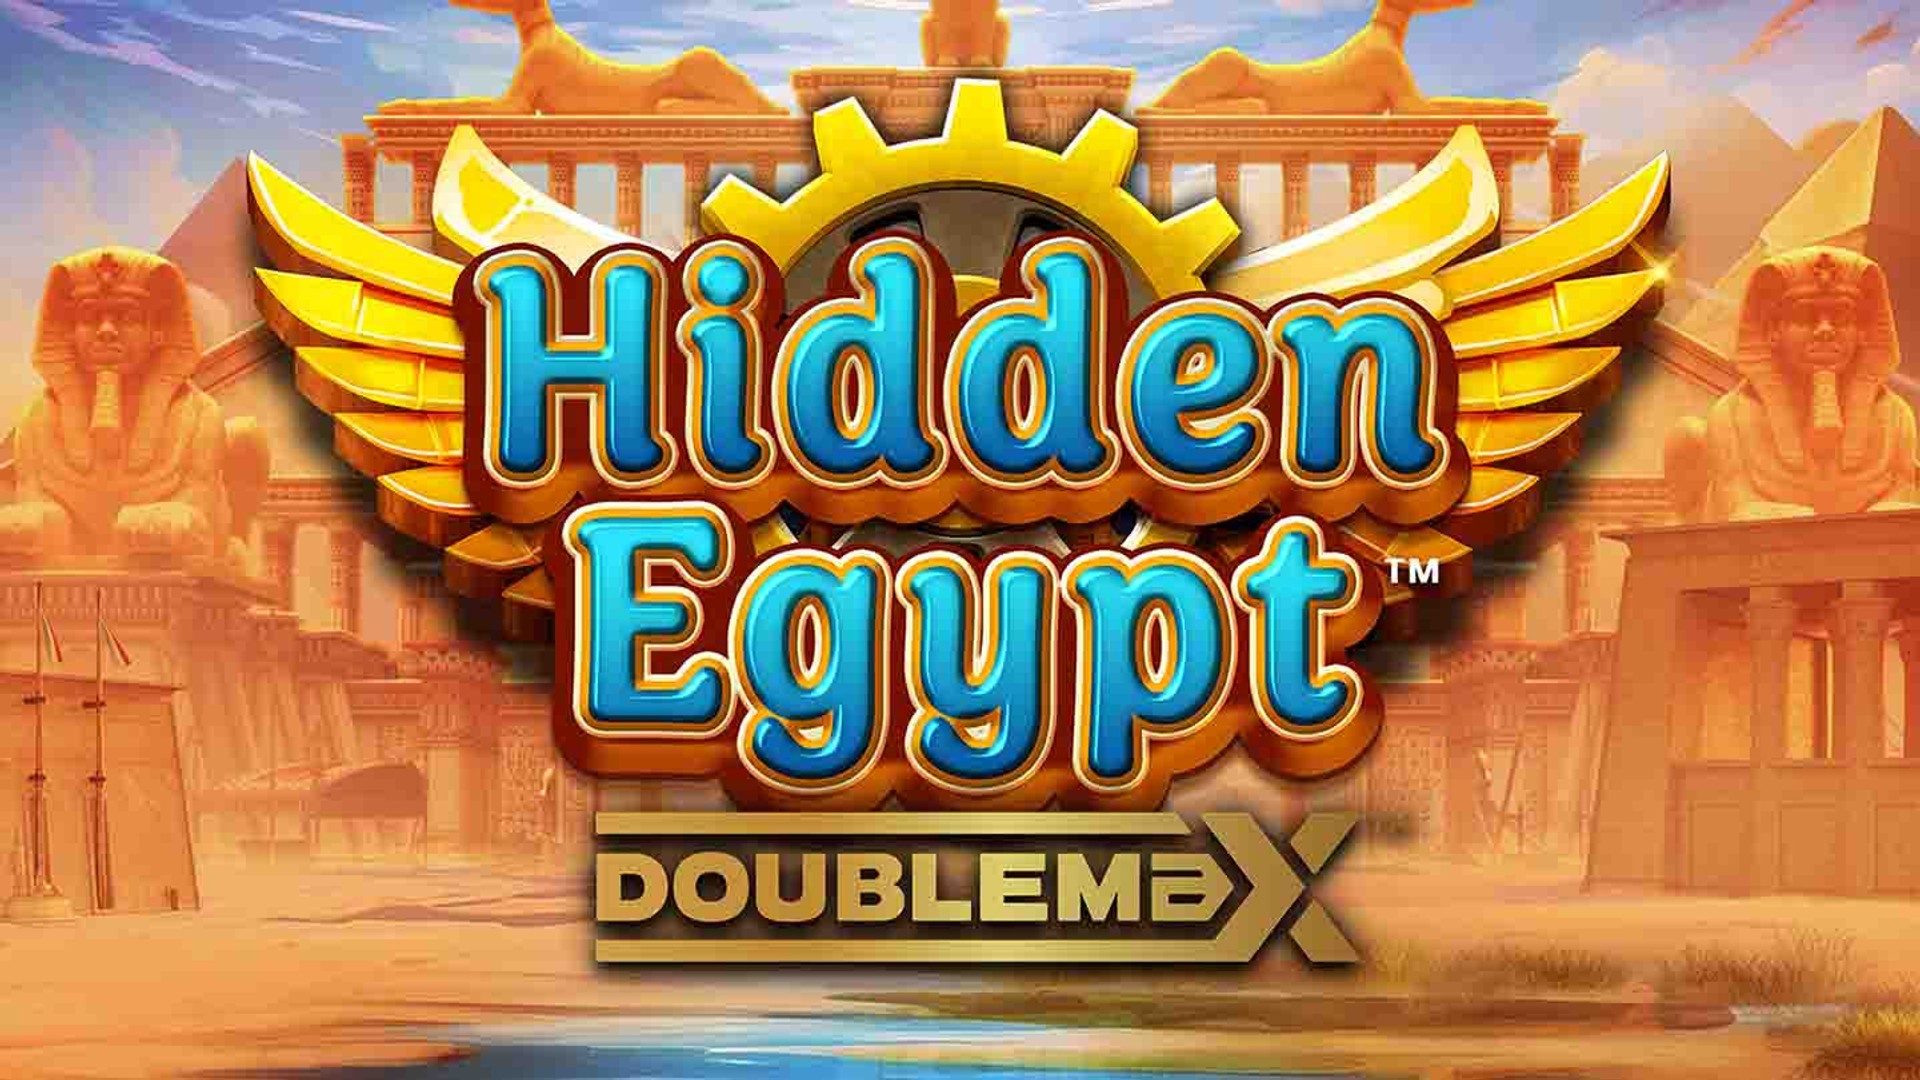 Hidden Egypt DoubleMax